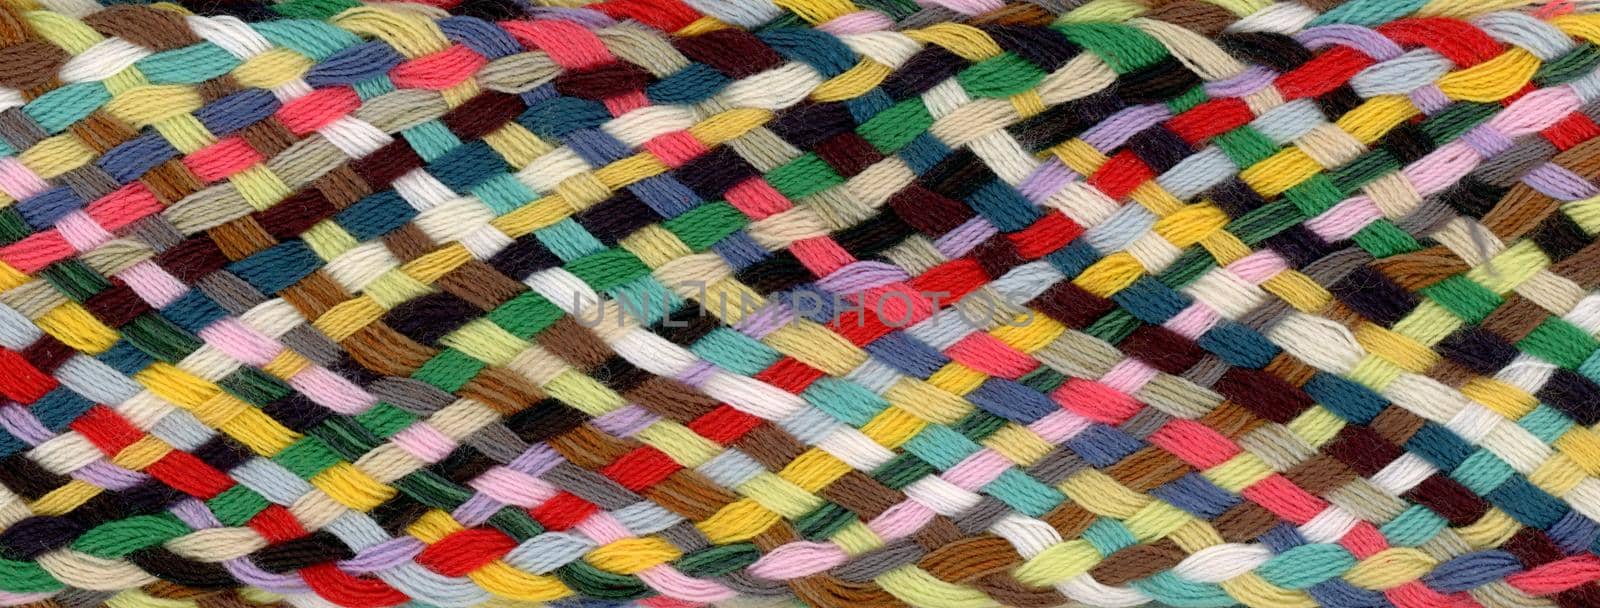 Sew Thread Plait texture by claudiodivizia